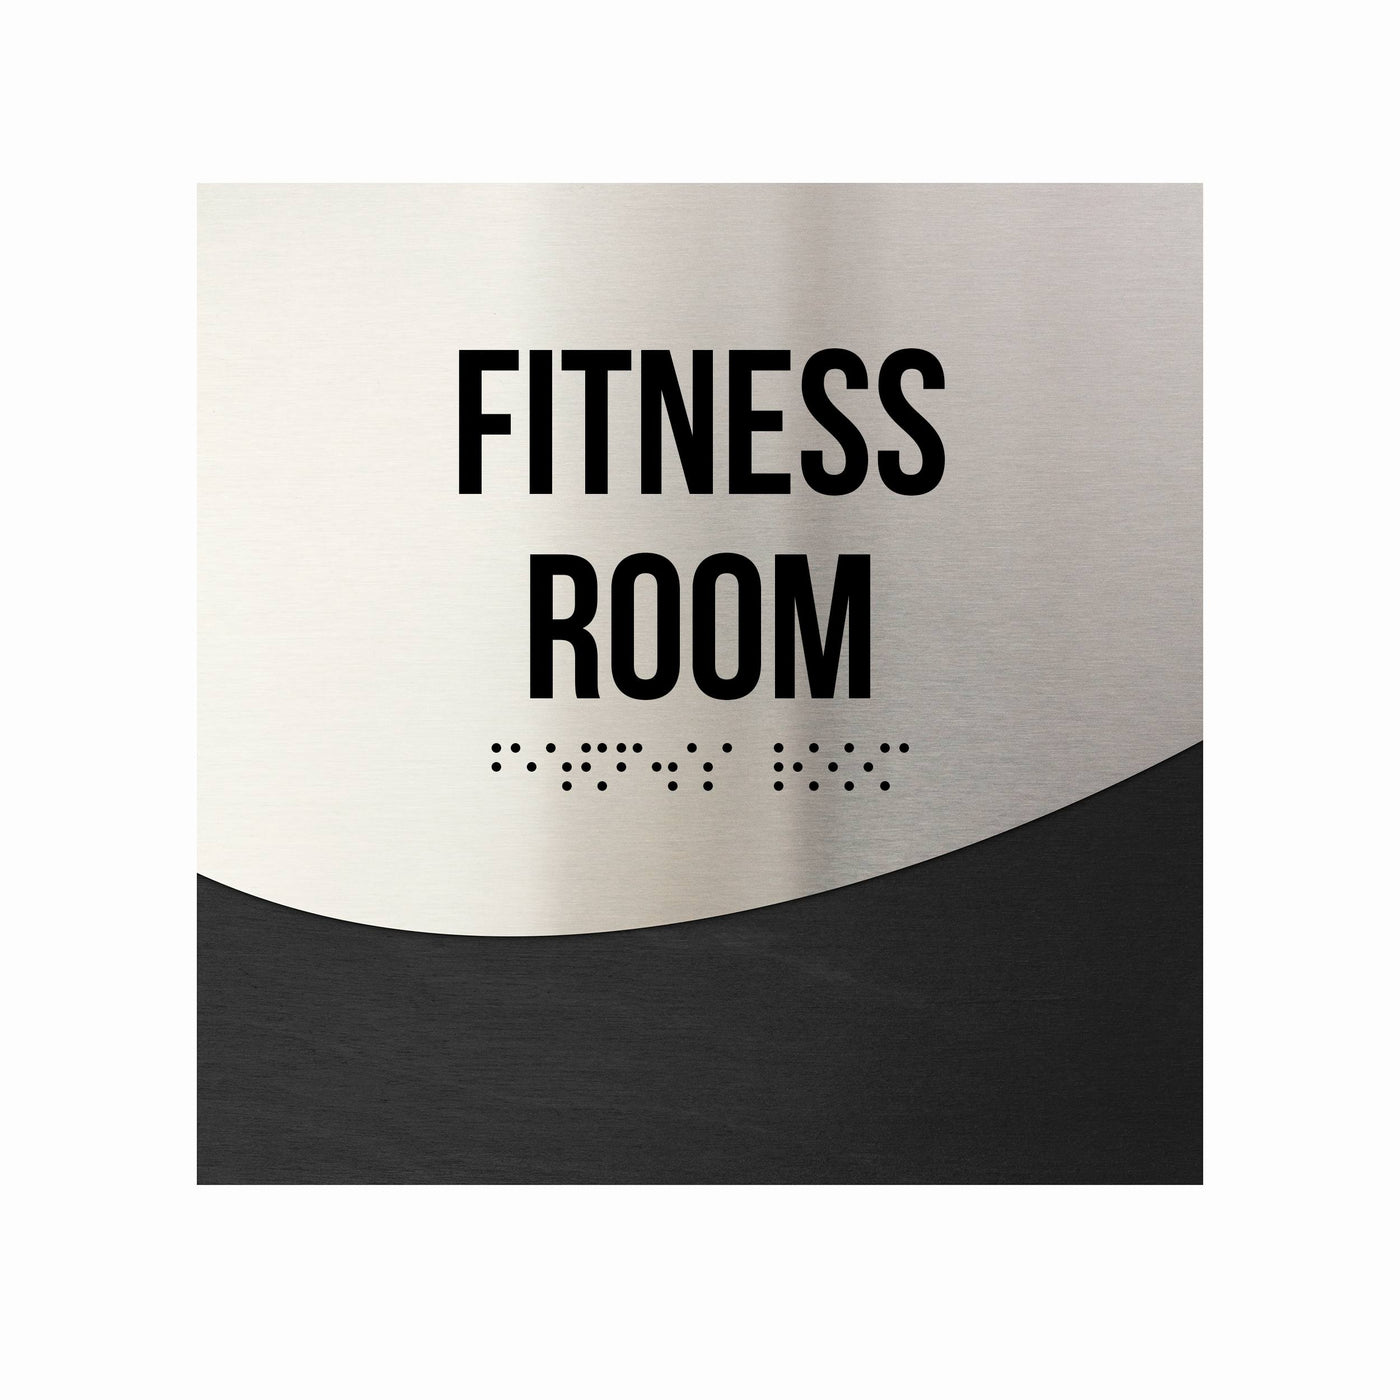 Door Signs - Fitness Room Signs - Stainless Steel & Wood "Jure" Design